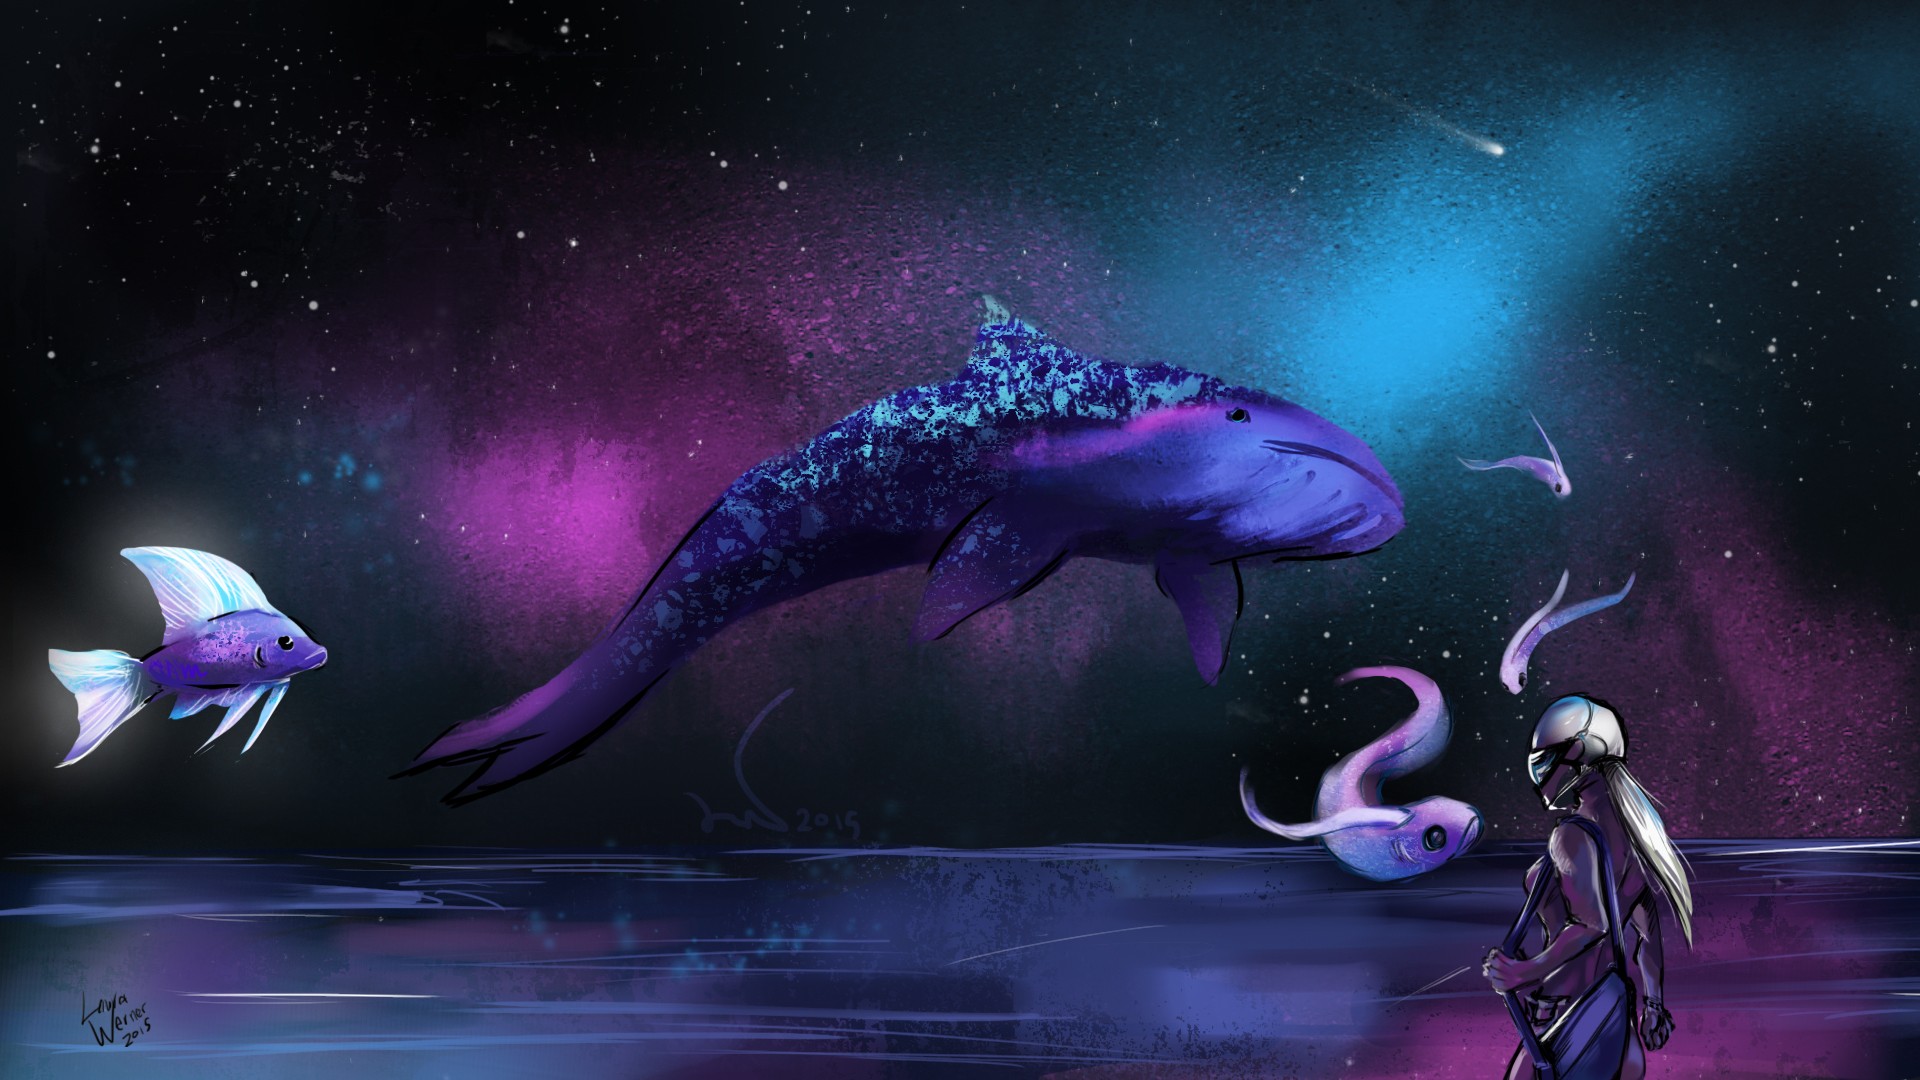 General 1920x1080 space fish whale sea fantasy art science fiction digital art DeviantArt starry night